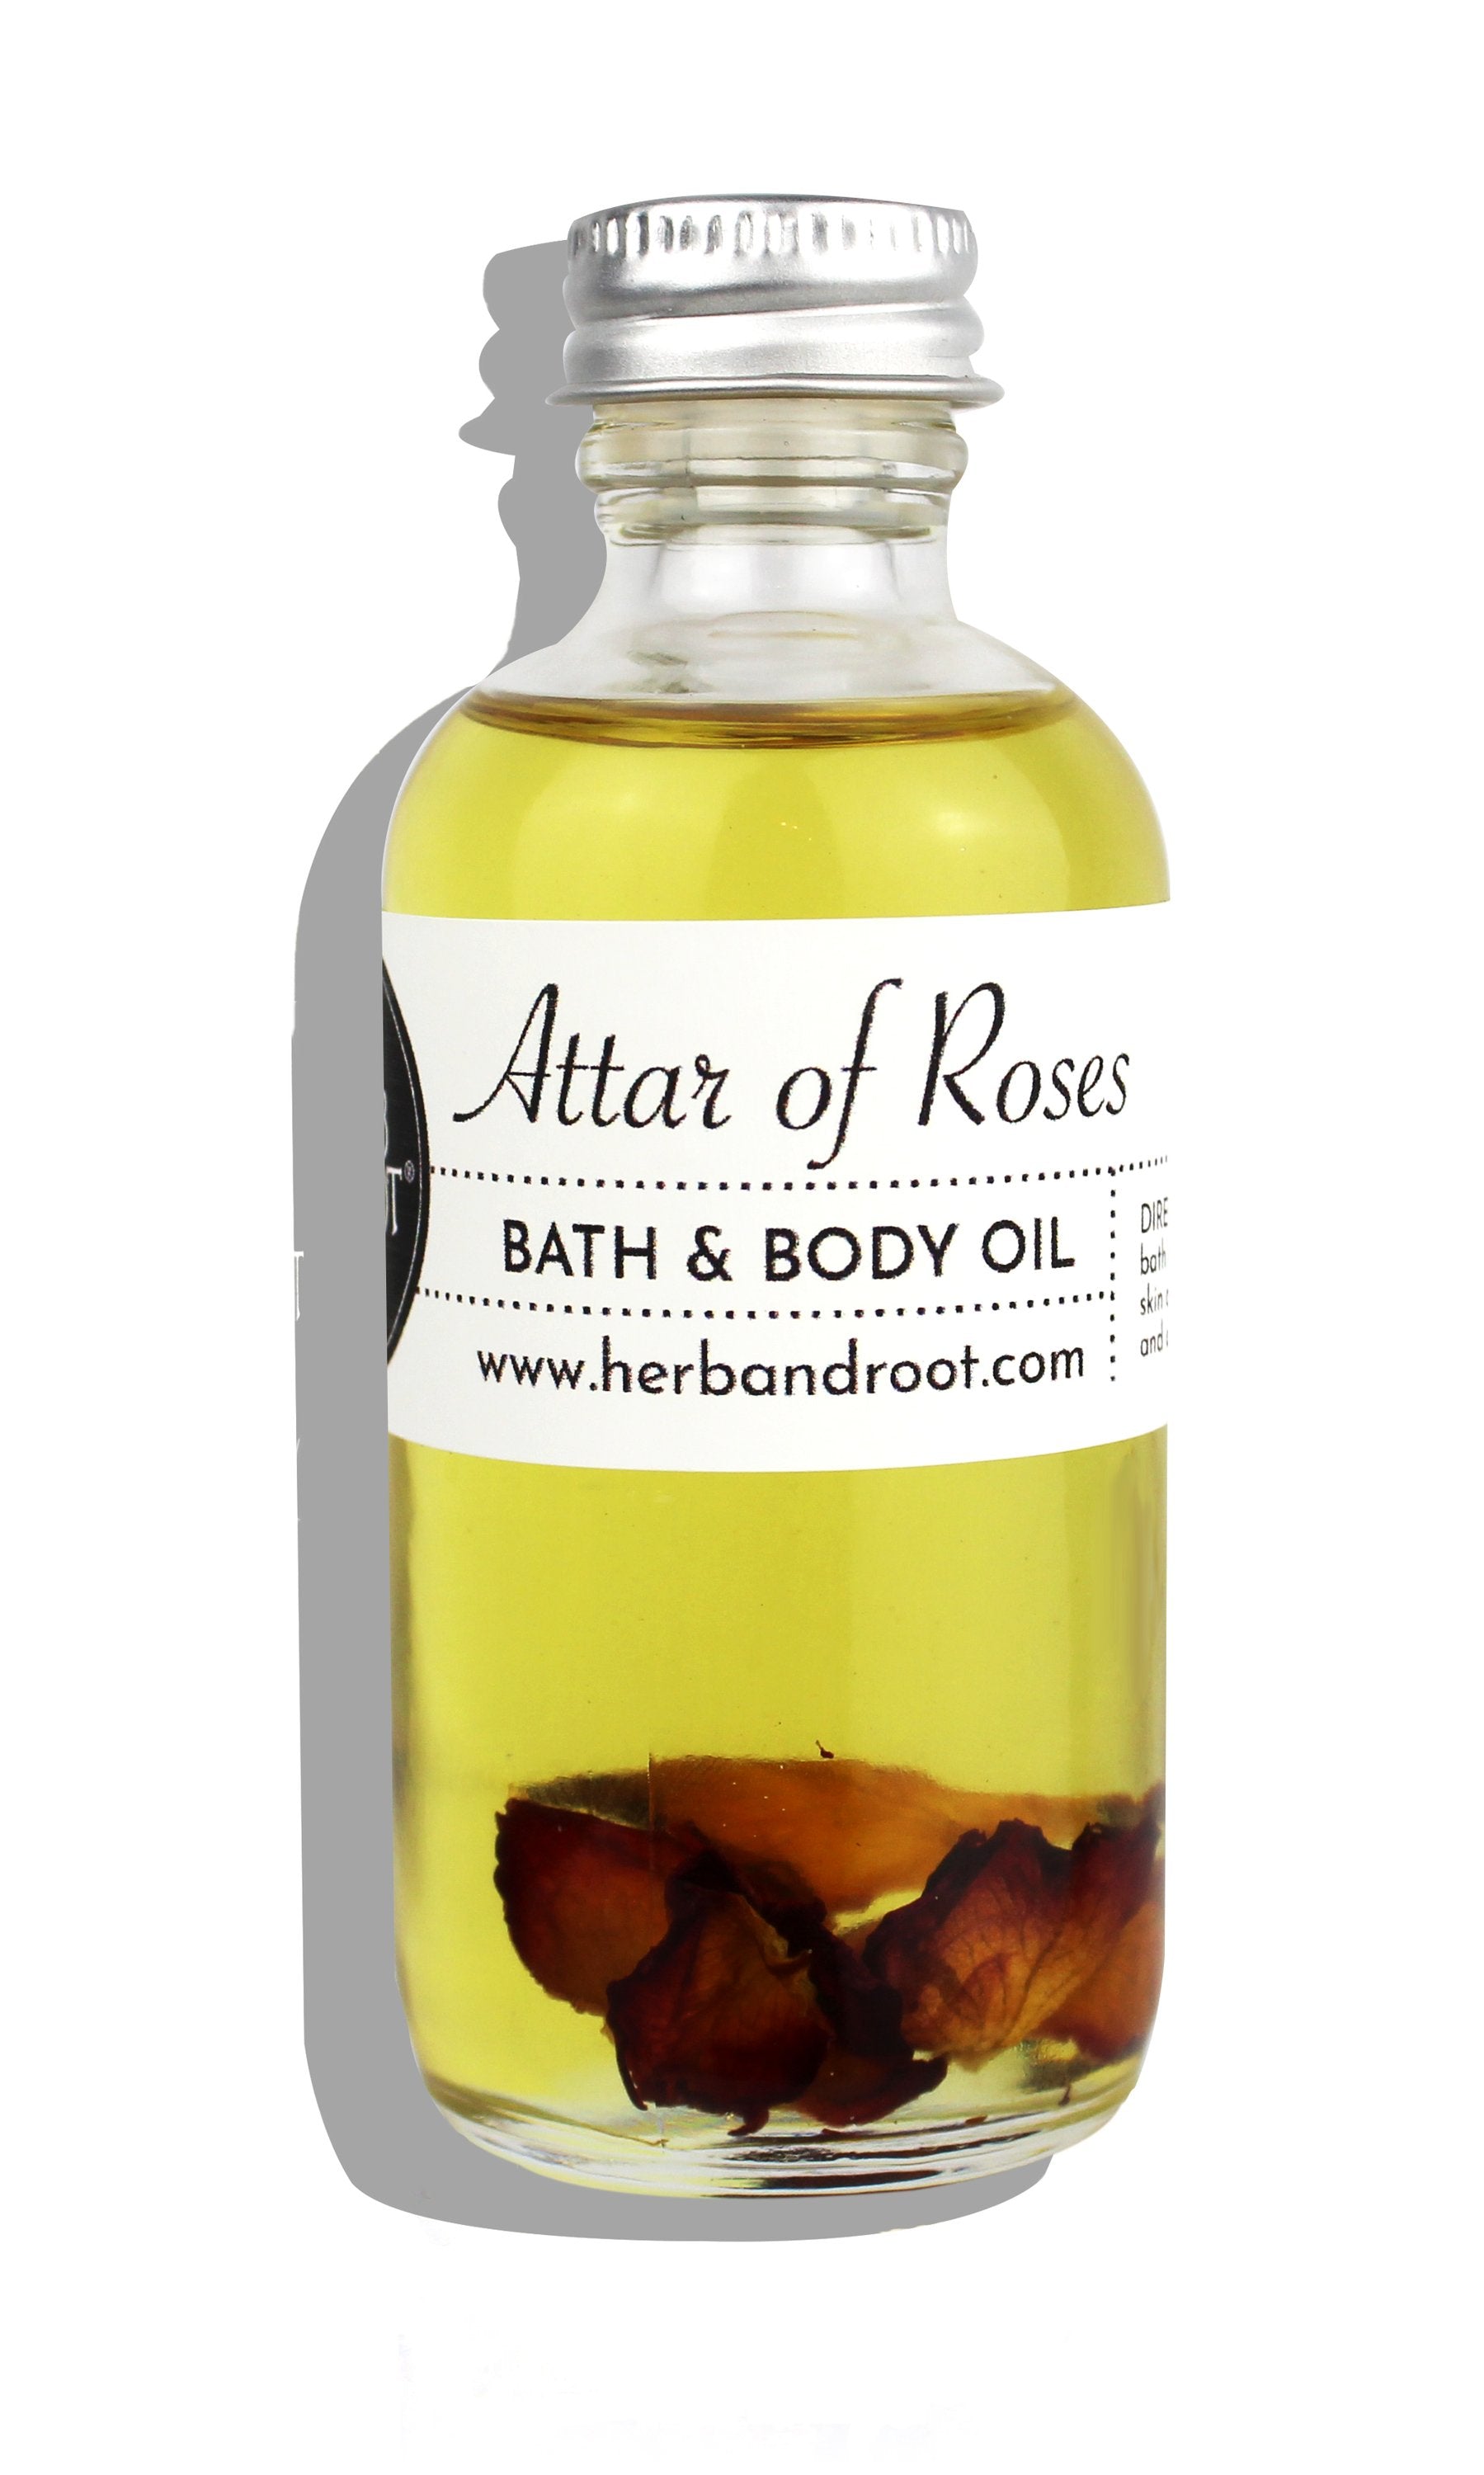 Attar of Roses Bath & Body Oil